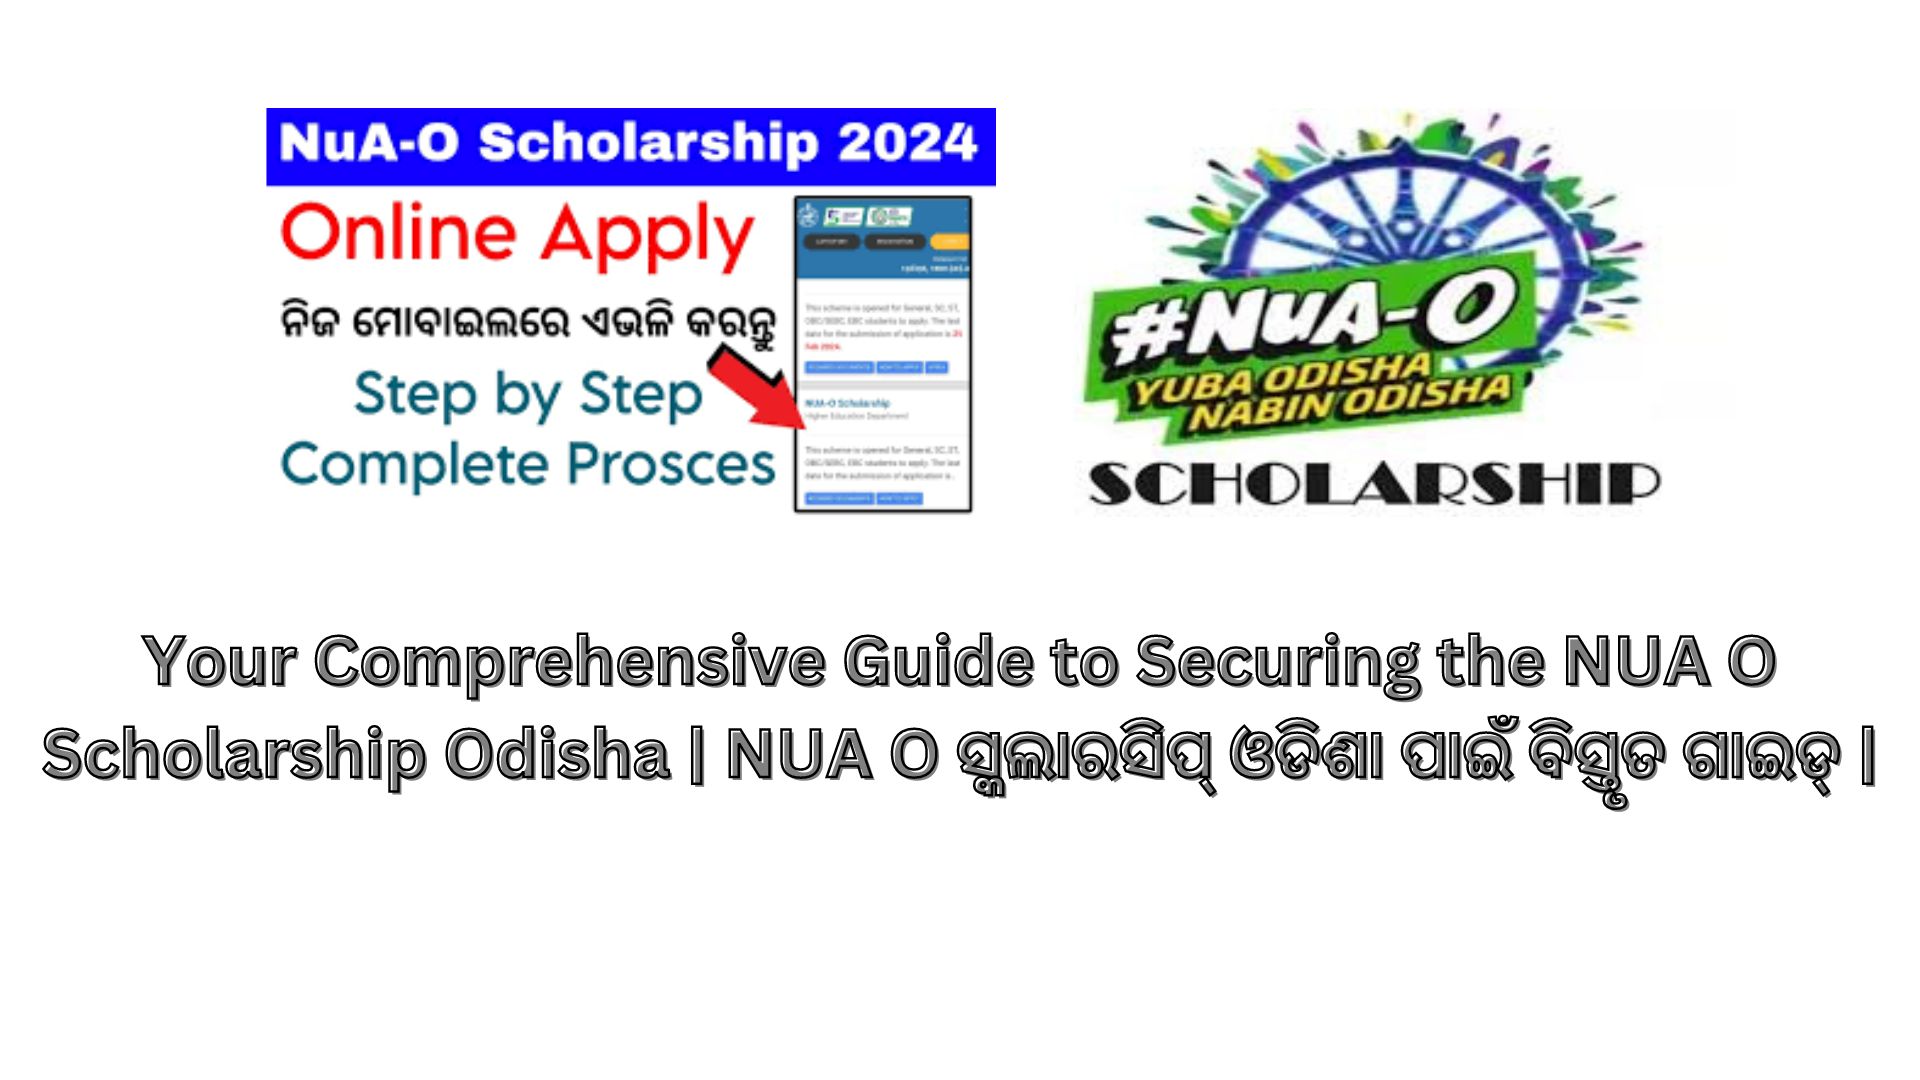 Your Comprehensive Guide to Securing the NUA O Scholarship Odisha | NUA O ସ୍କଲାରସିପ୍ ଓଡିଶା ପାଇଁ ବିସ୍ତୃତ ଗାଇଡ୍ |